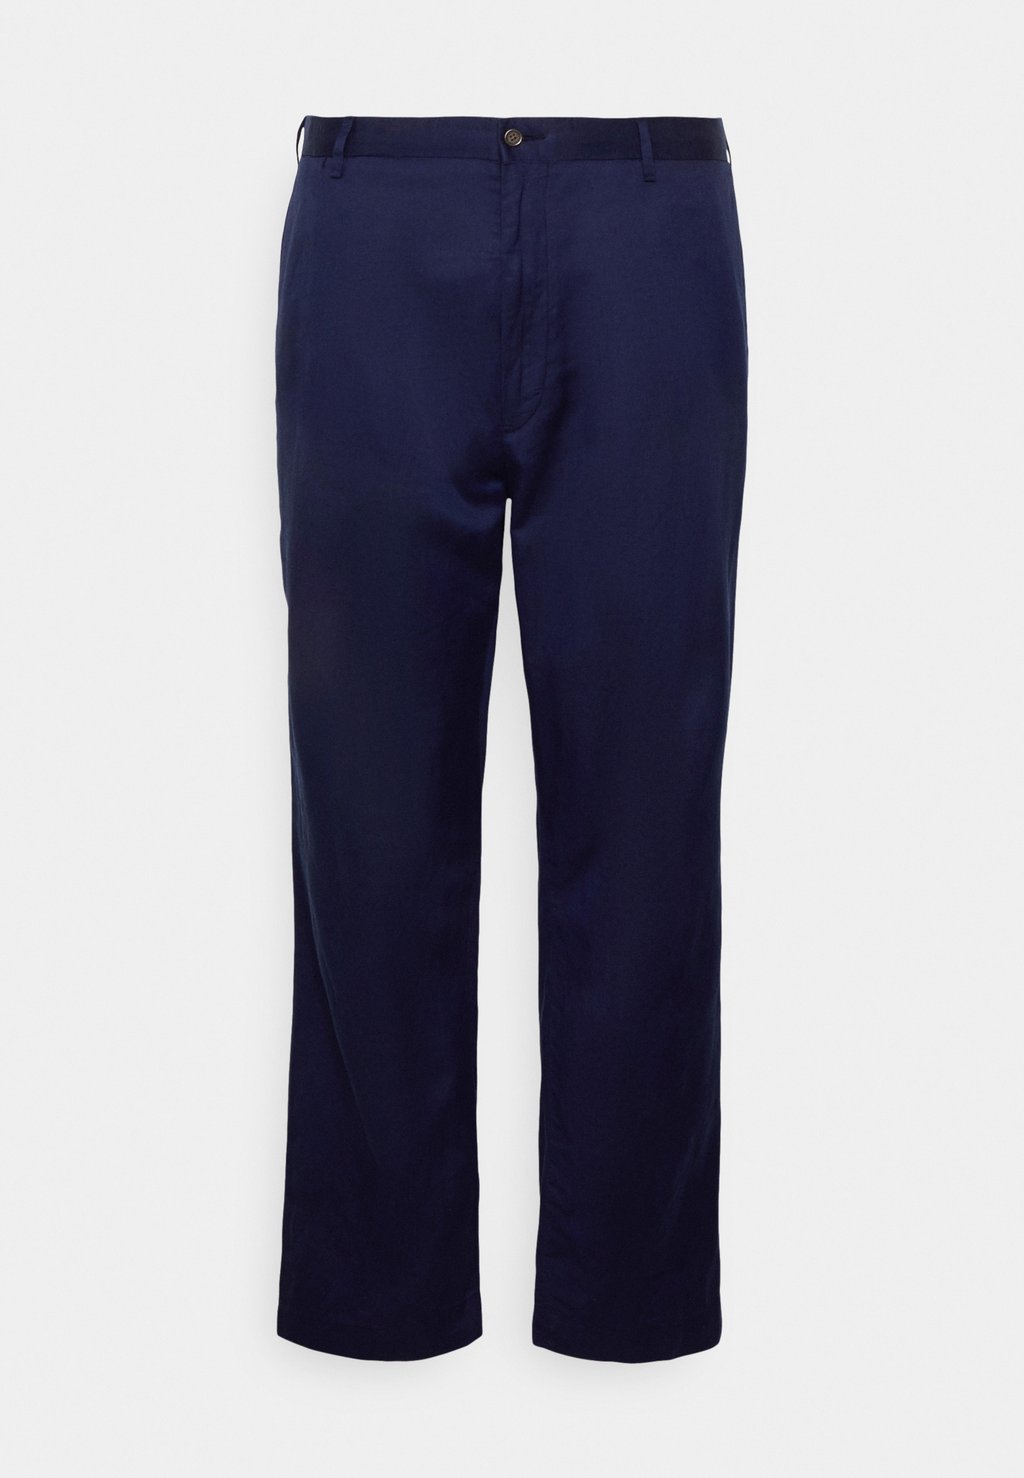 Тканевые брюки Polo Ralph Lauren Big & Tall, темно-синий